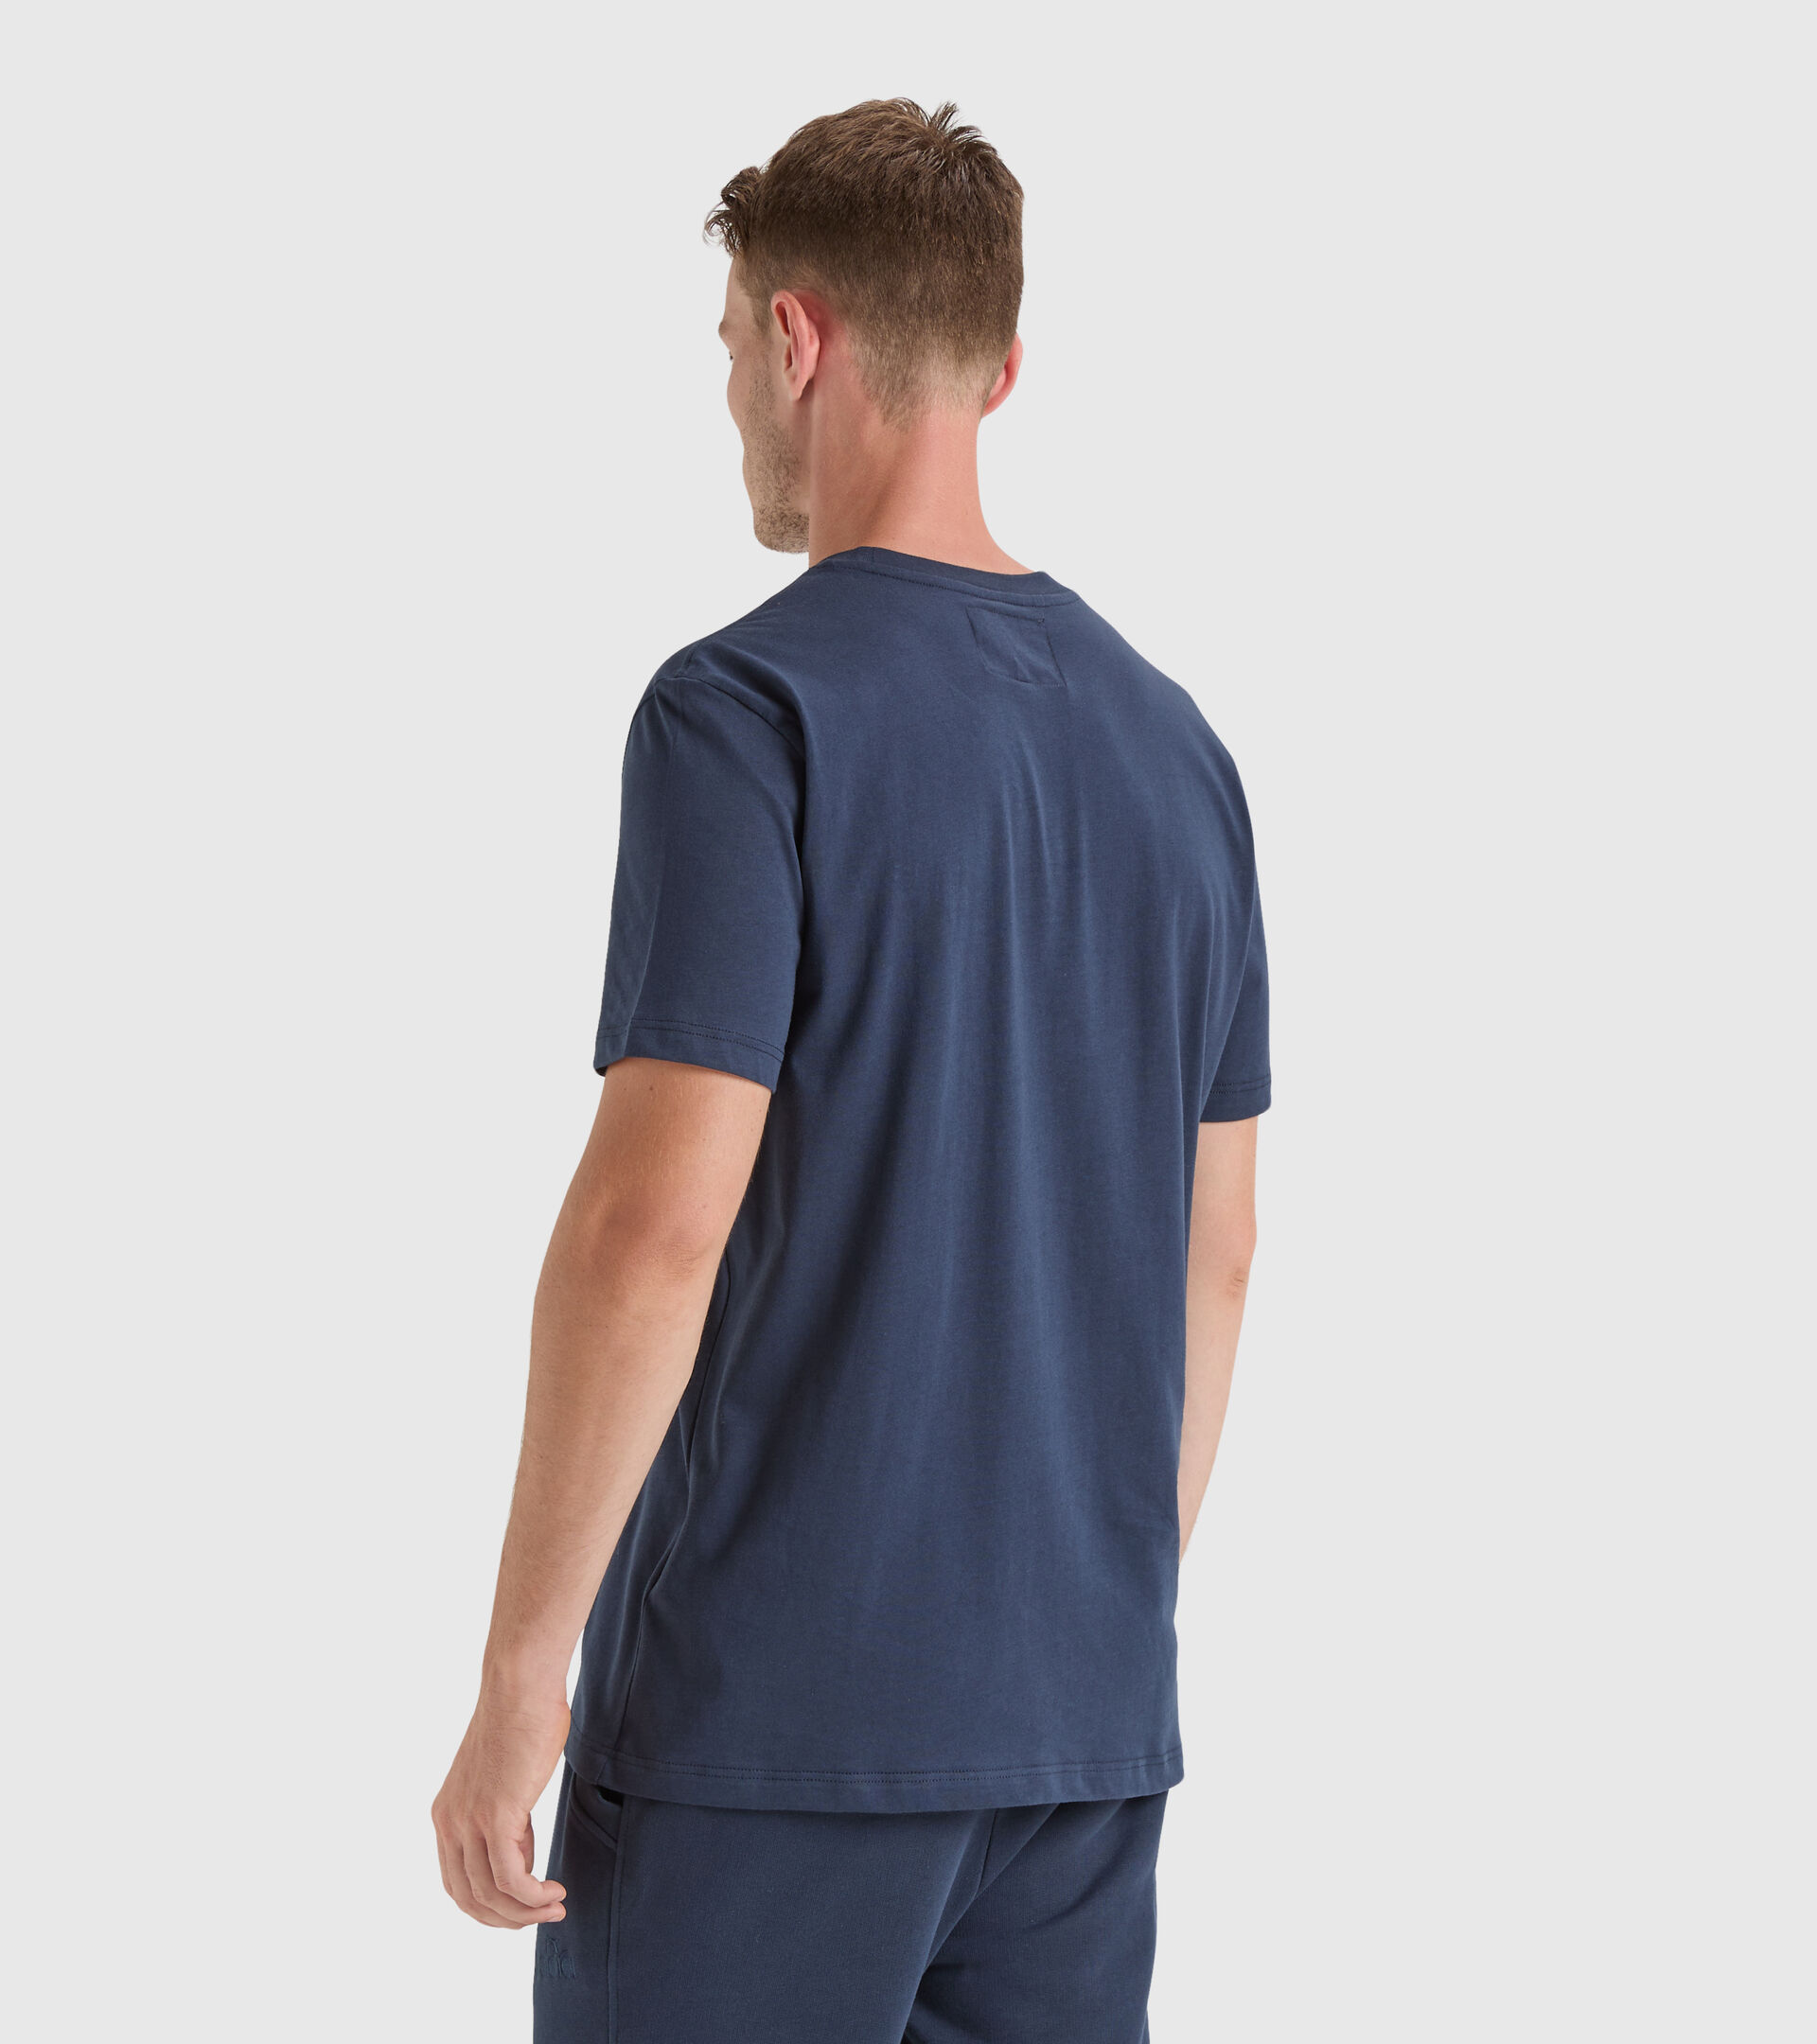 Cotton T-shirt - Made in Italy - Men T-SHIRT SS MII BLUE CORSAIR - Diadora